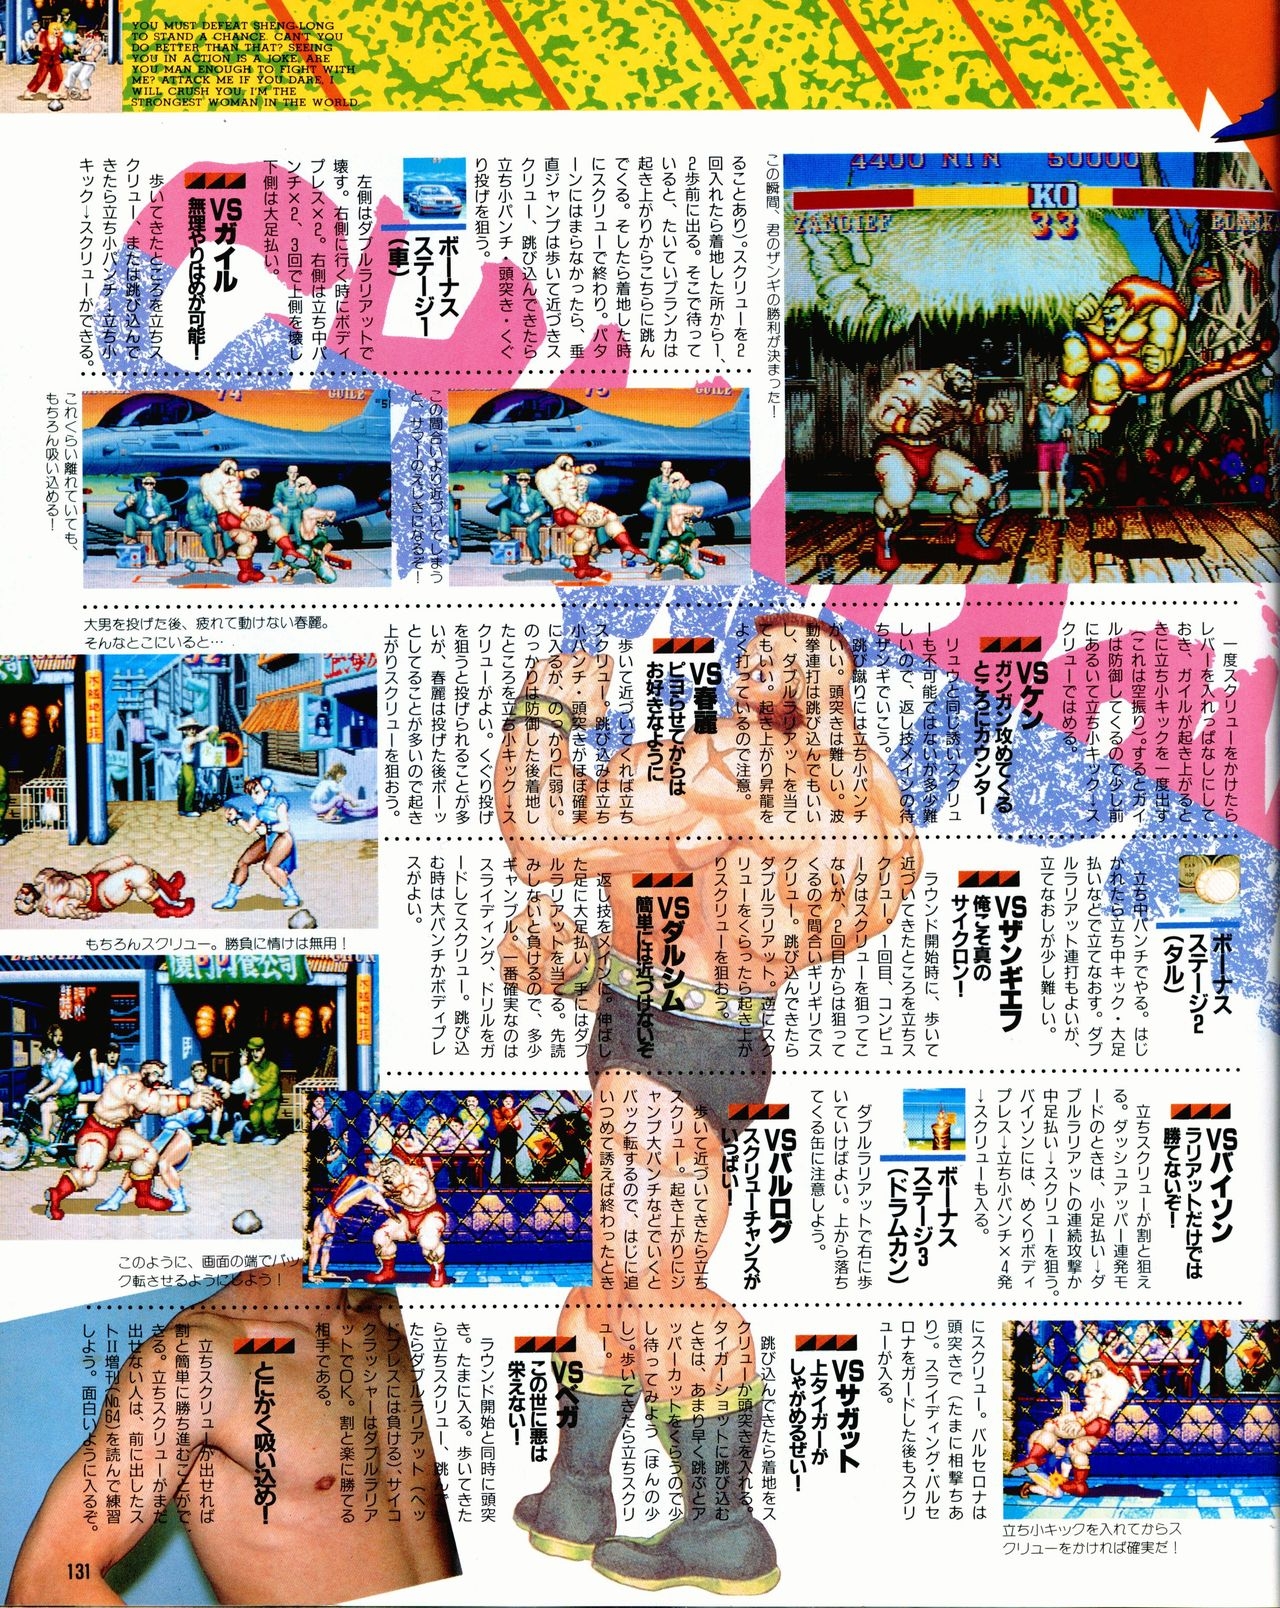 Street Fighter II Dash - Gamest special issue 77 132